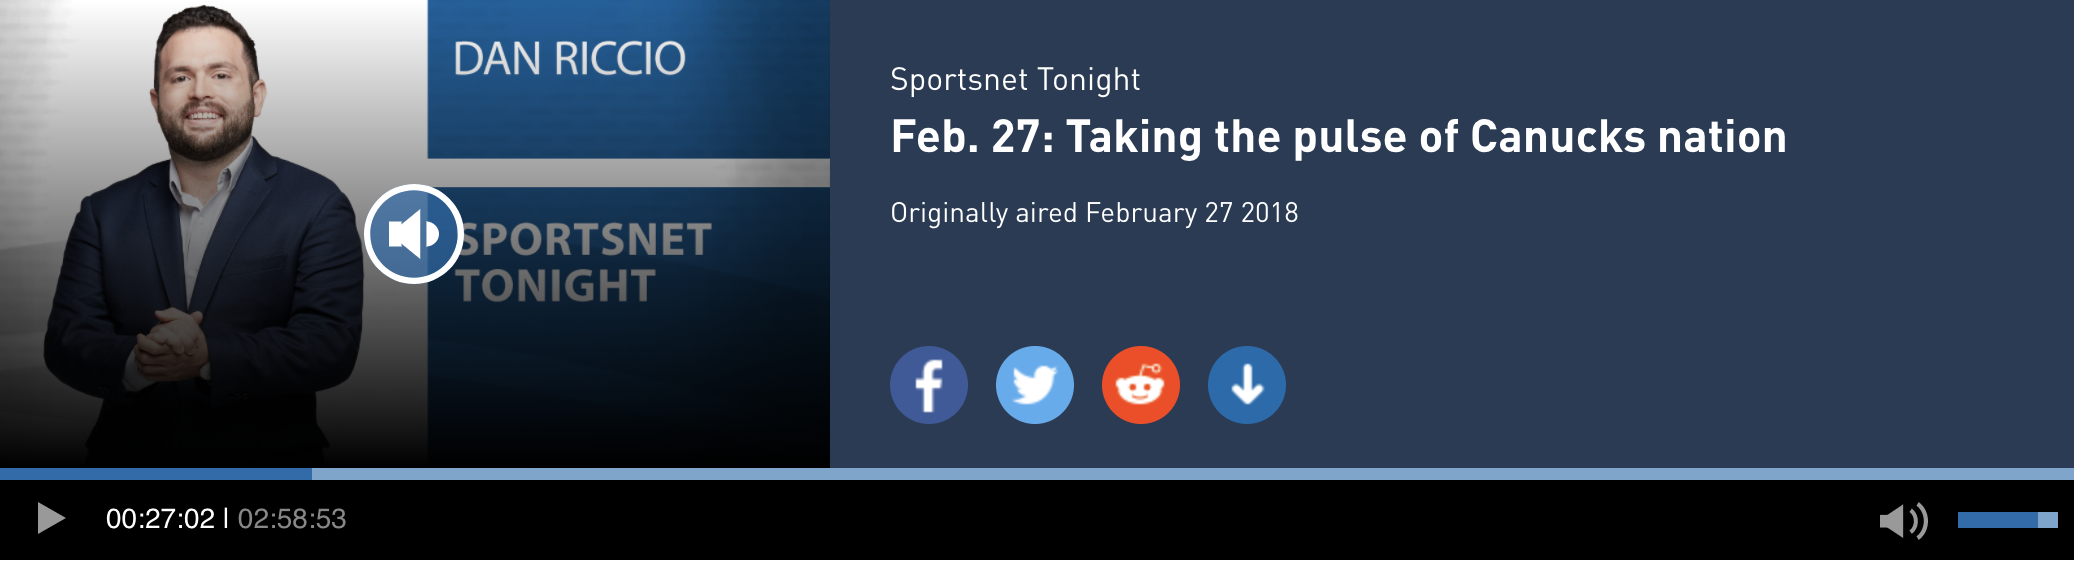 Sportsnet Tonight